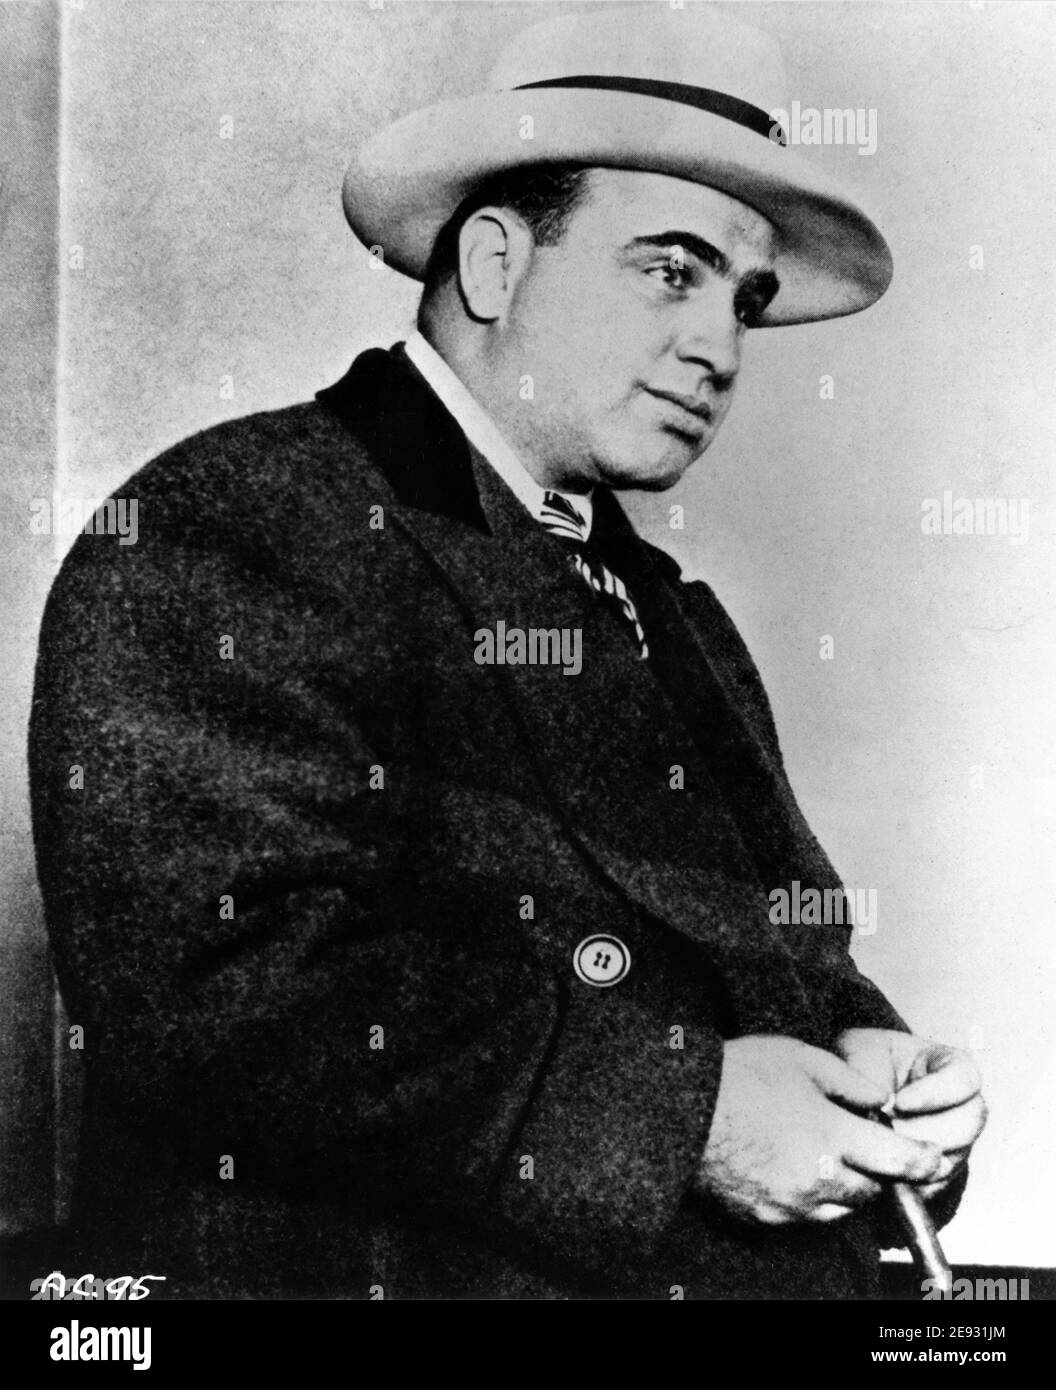 Chicago Gangster AL CAPONE Candid Portrait um 1929 Stockfoto